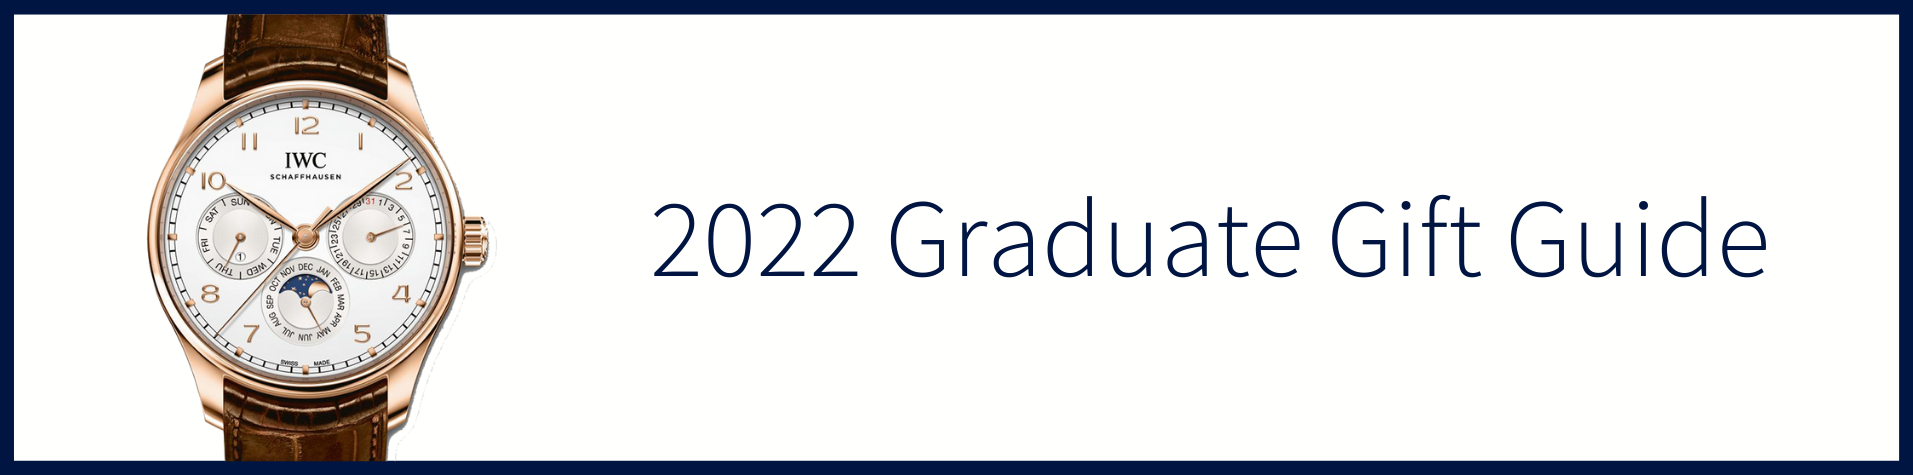 2022 Graduate Gift Guide